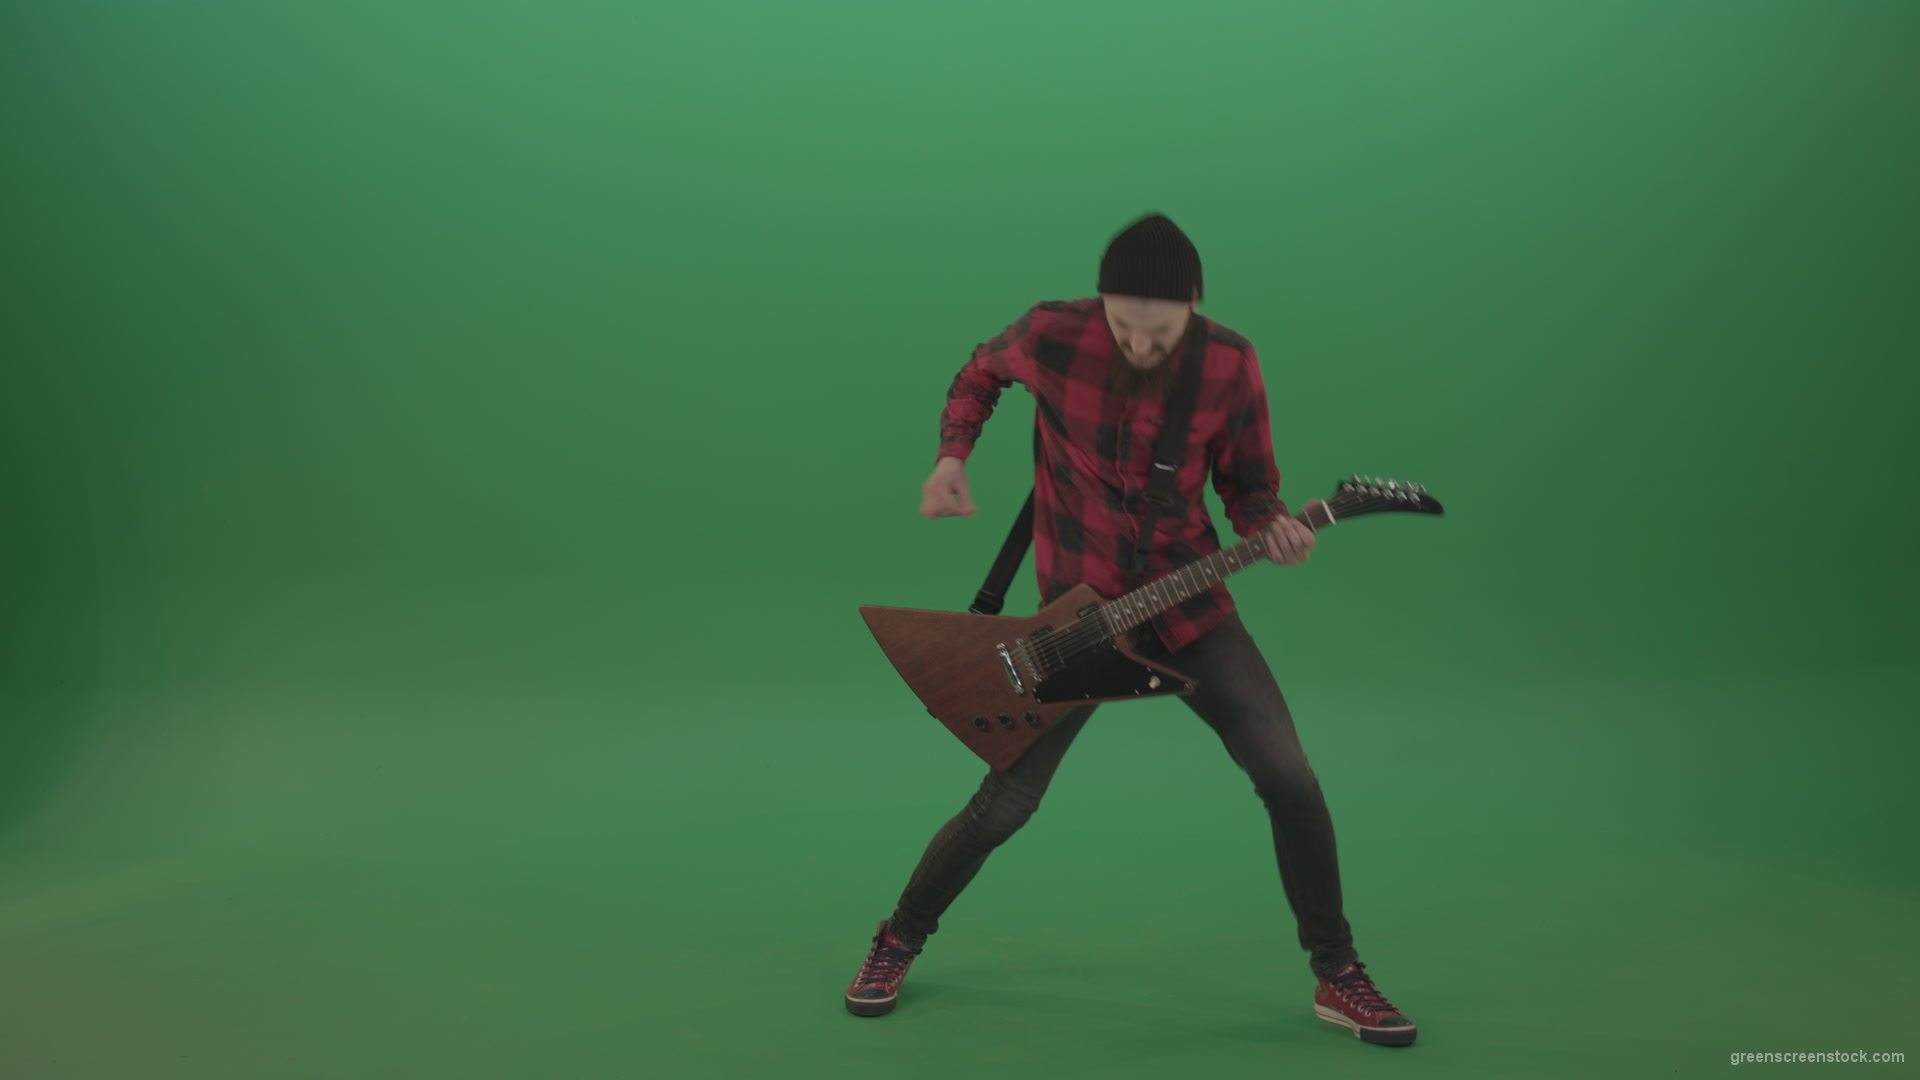 Full-size-Green-Screen-Musician-Rock-Guitarist-man-in-red-shirt-play-guitar-on-green-screen-1_007 Green Screen Stock